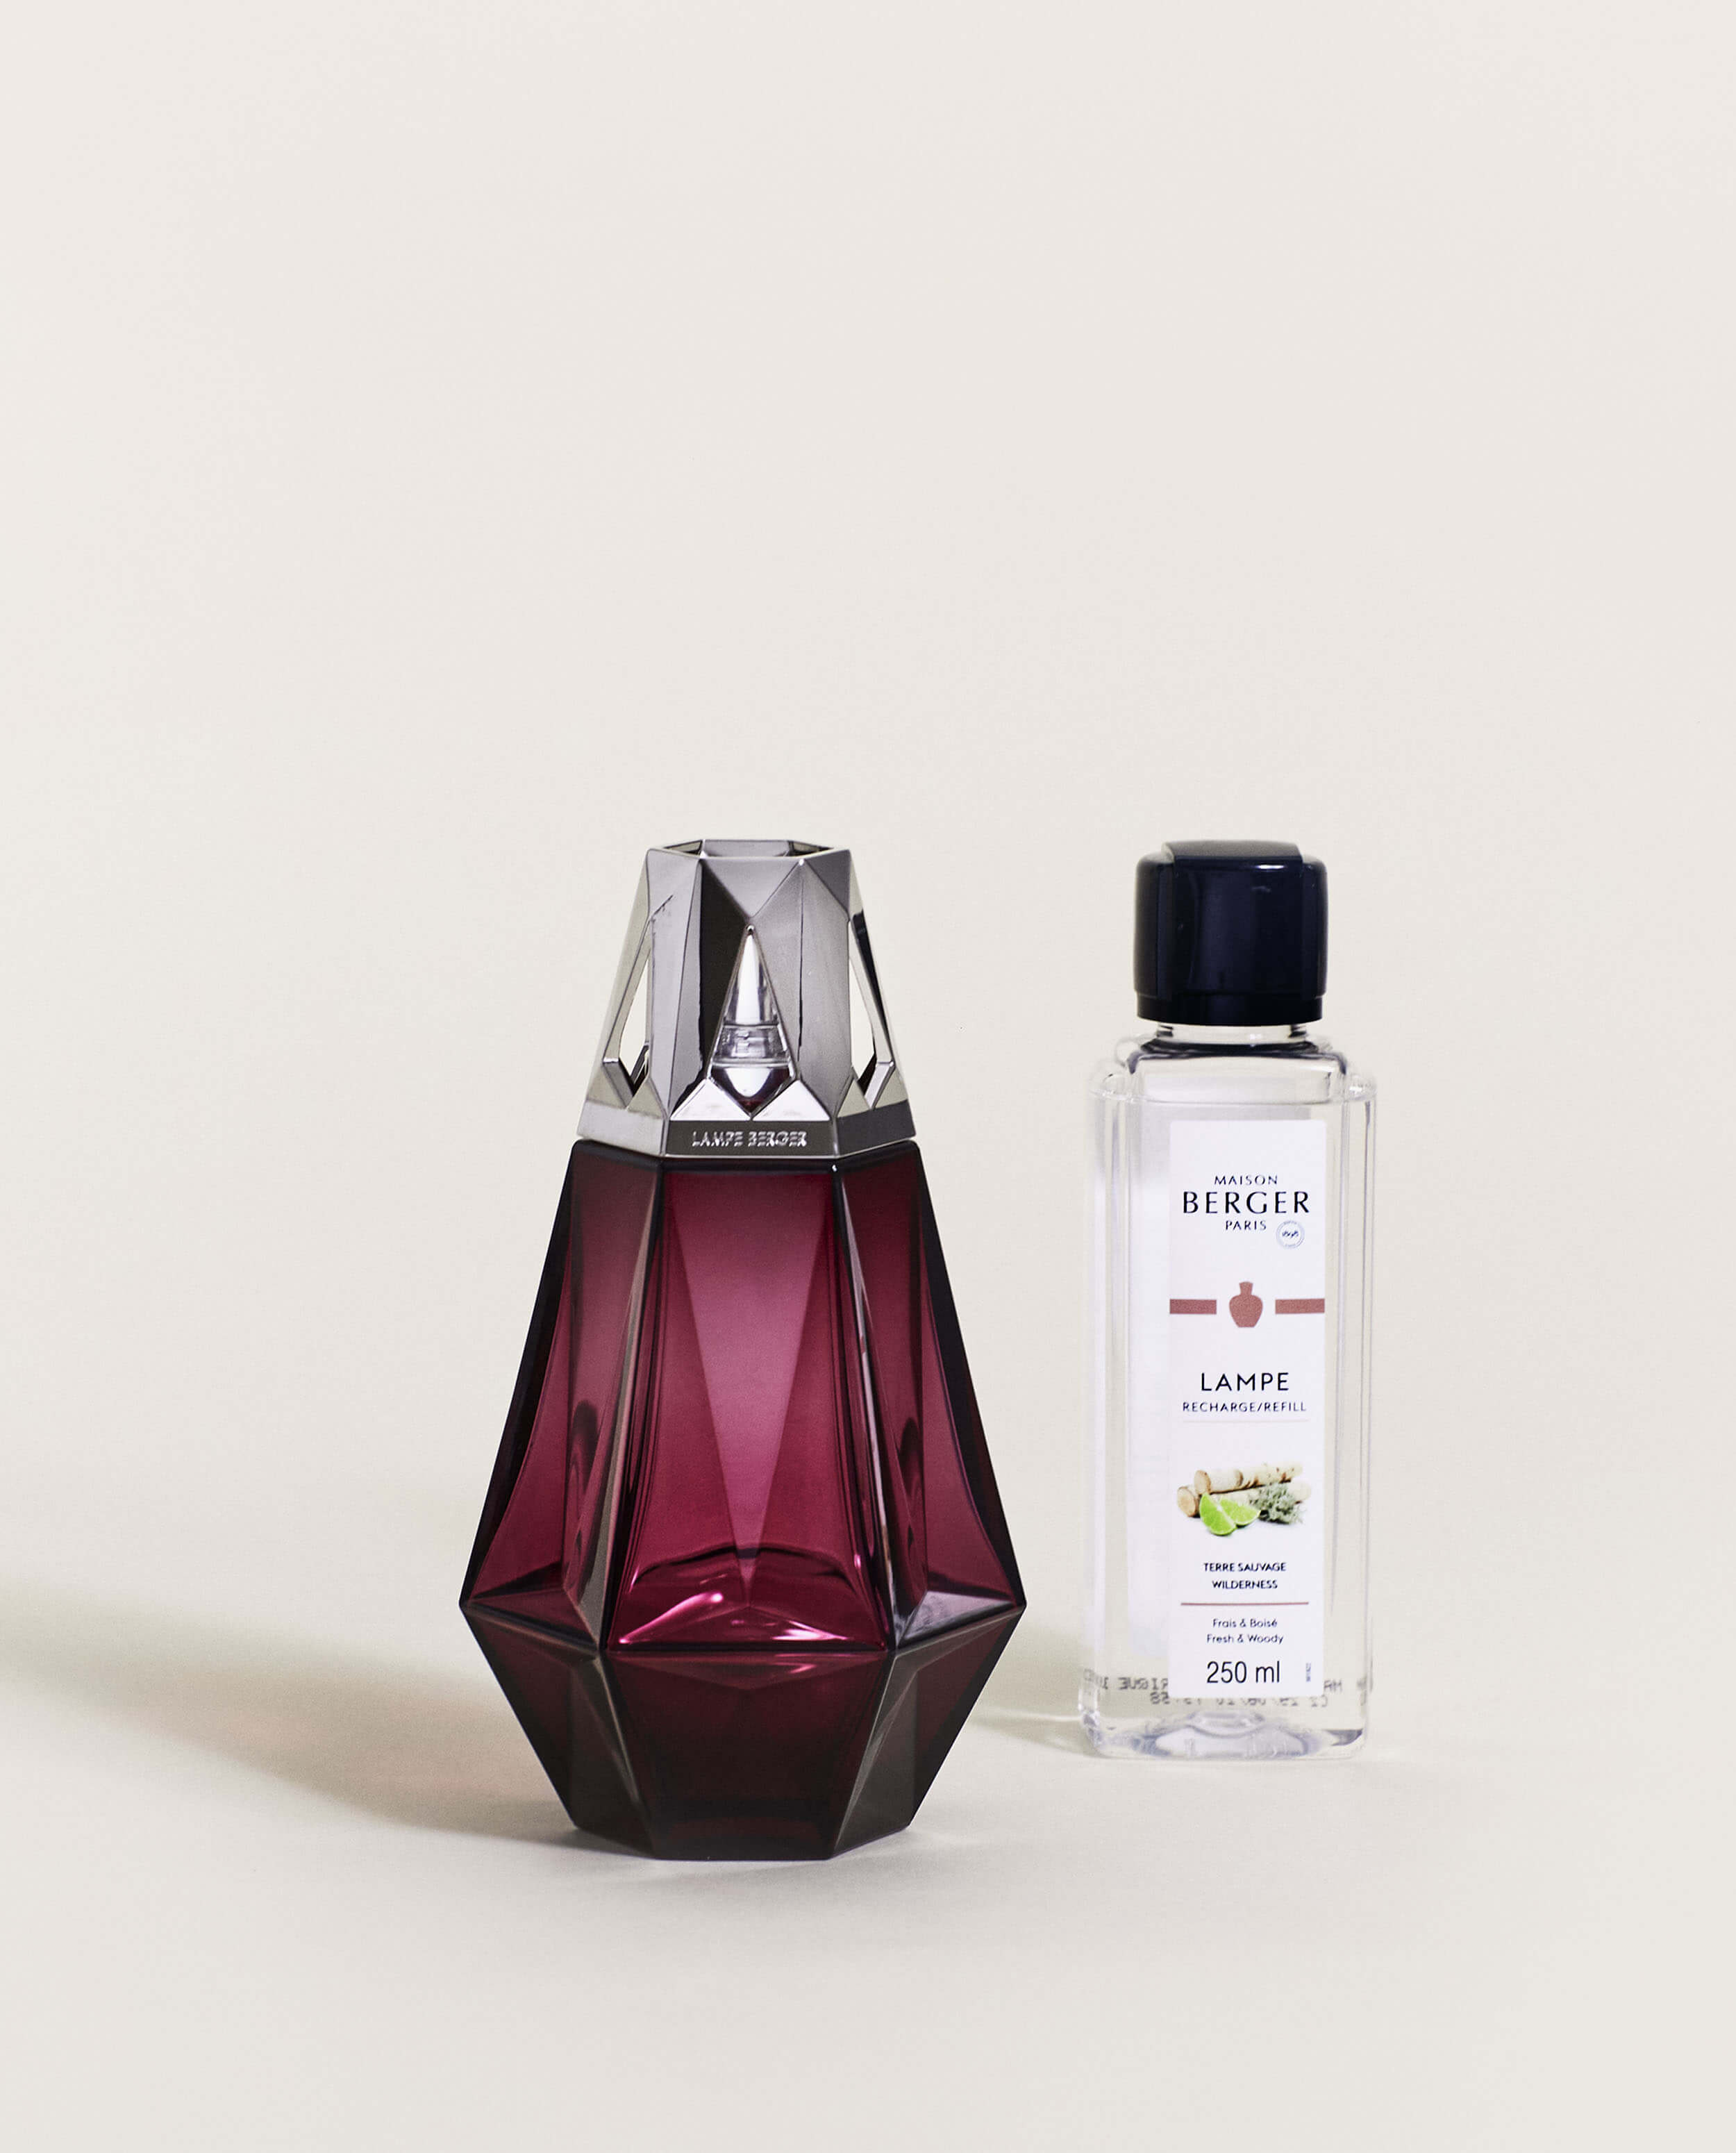 Red Temptation Elixir Parfum Zara perfume - a new fragrance for women and  men 2023